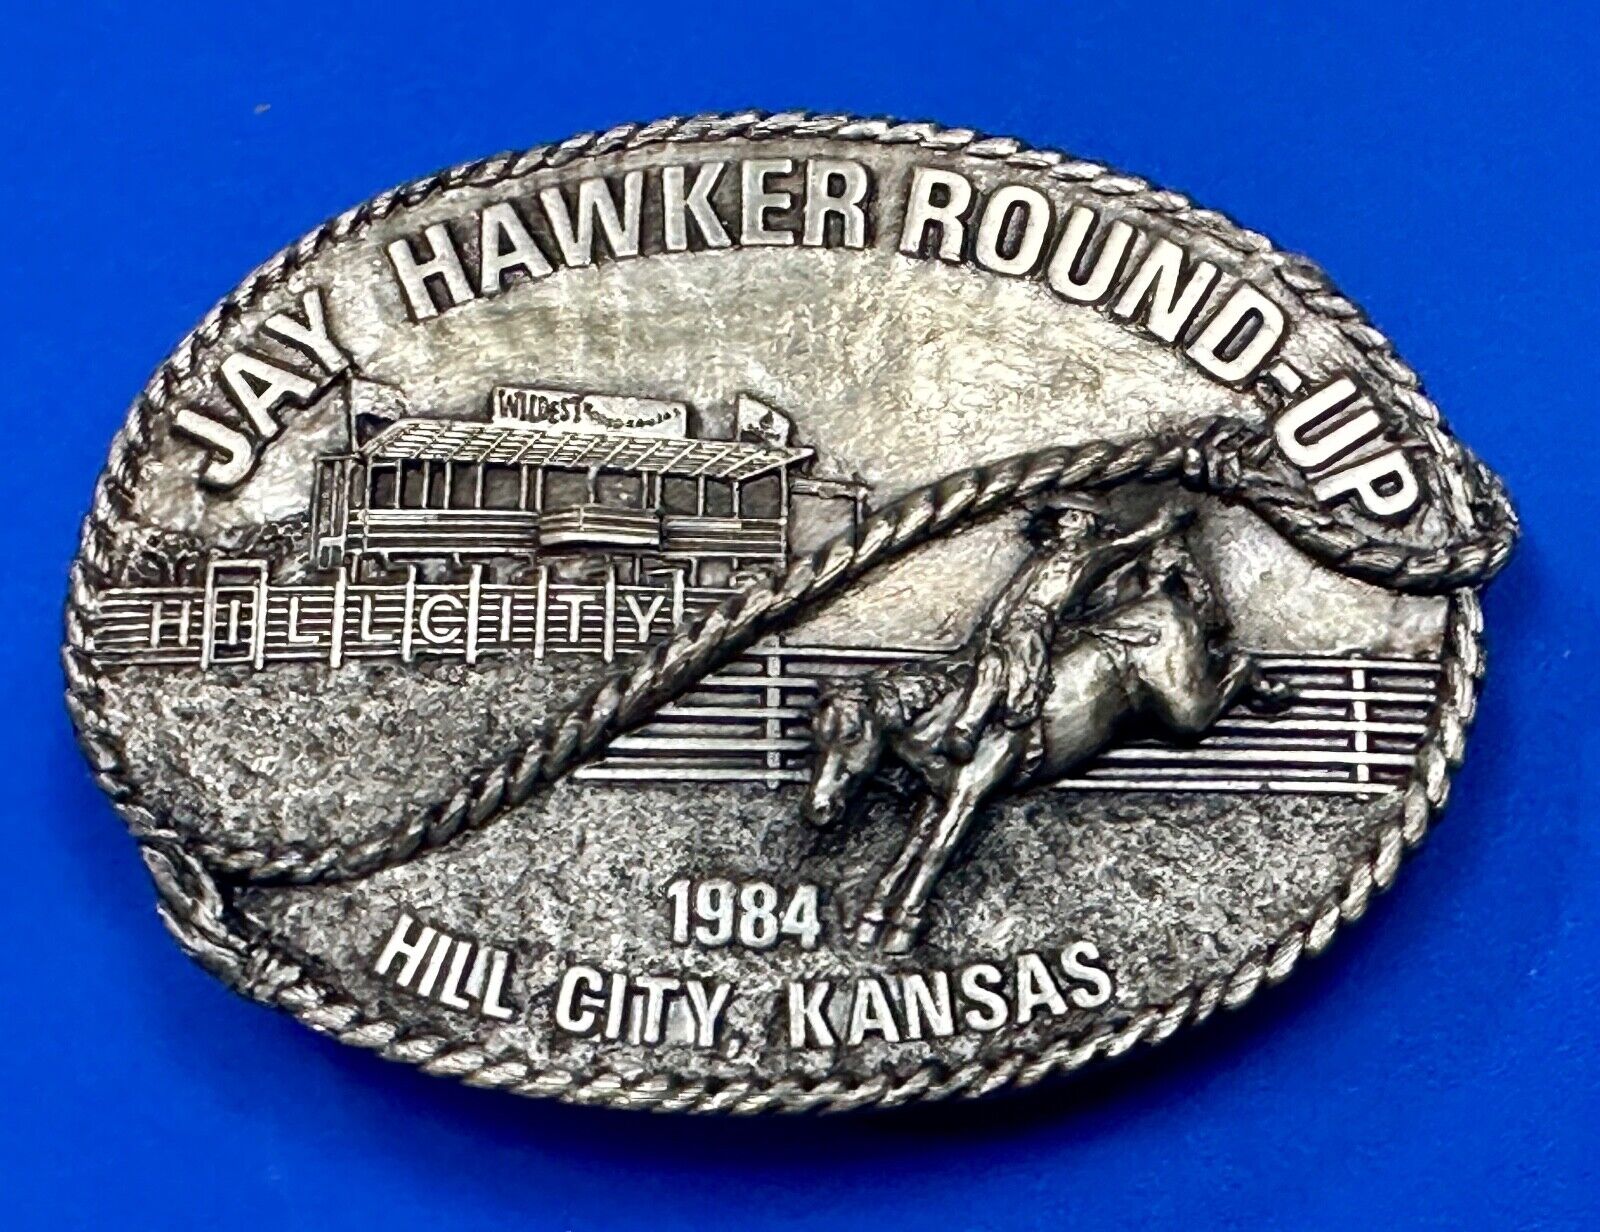 Hill City KS 1984 Jay Hawker Round Up Jayhawk Saddle Bronc RCA Rodeo Belt Buckle